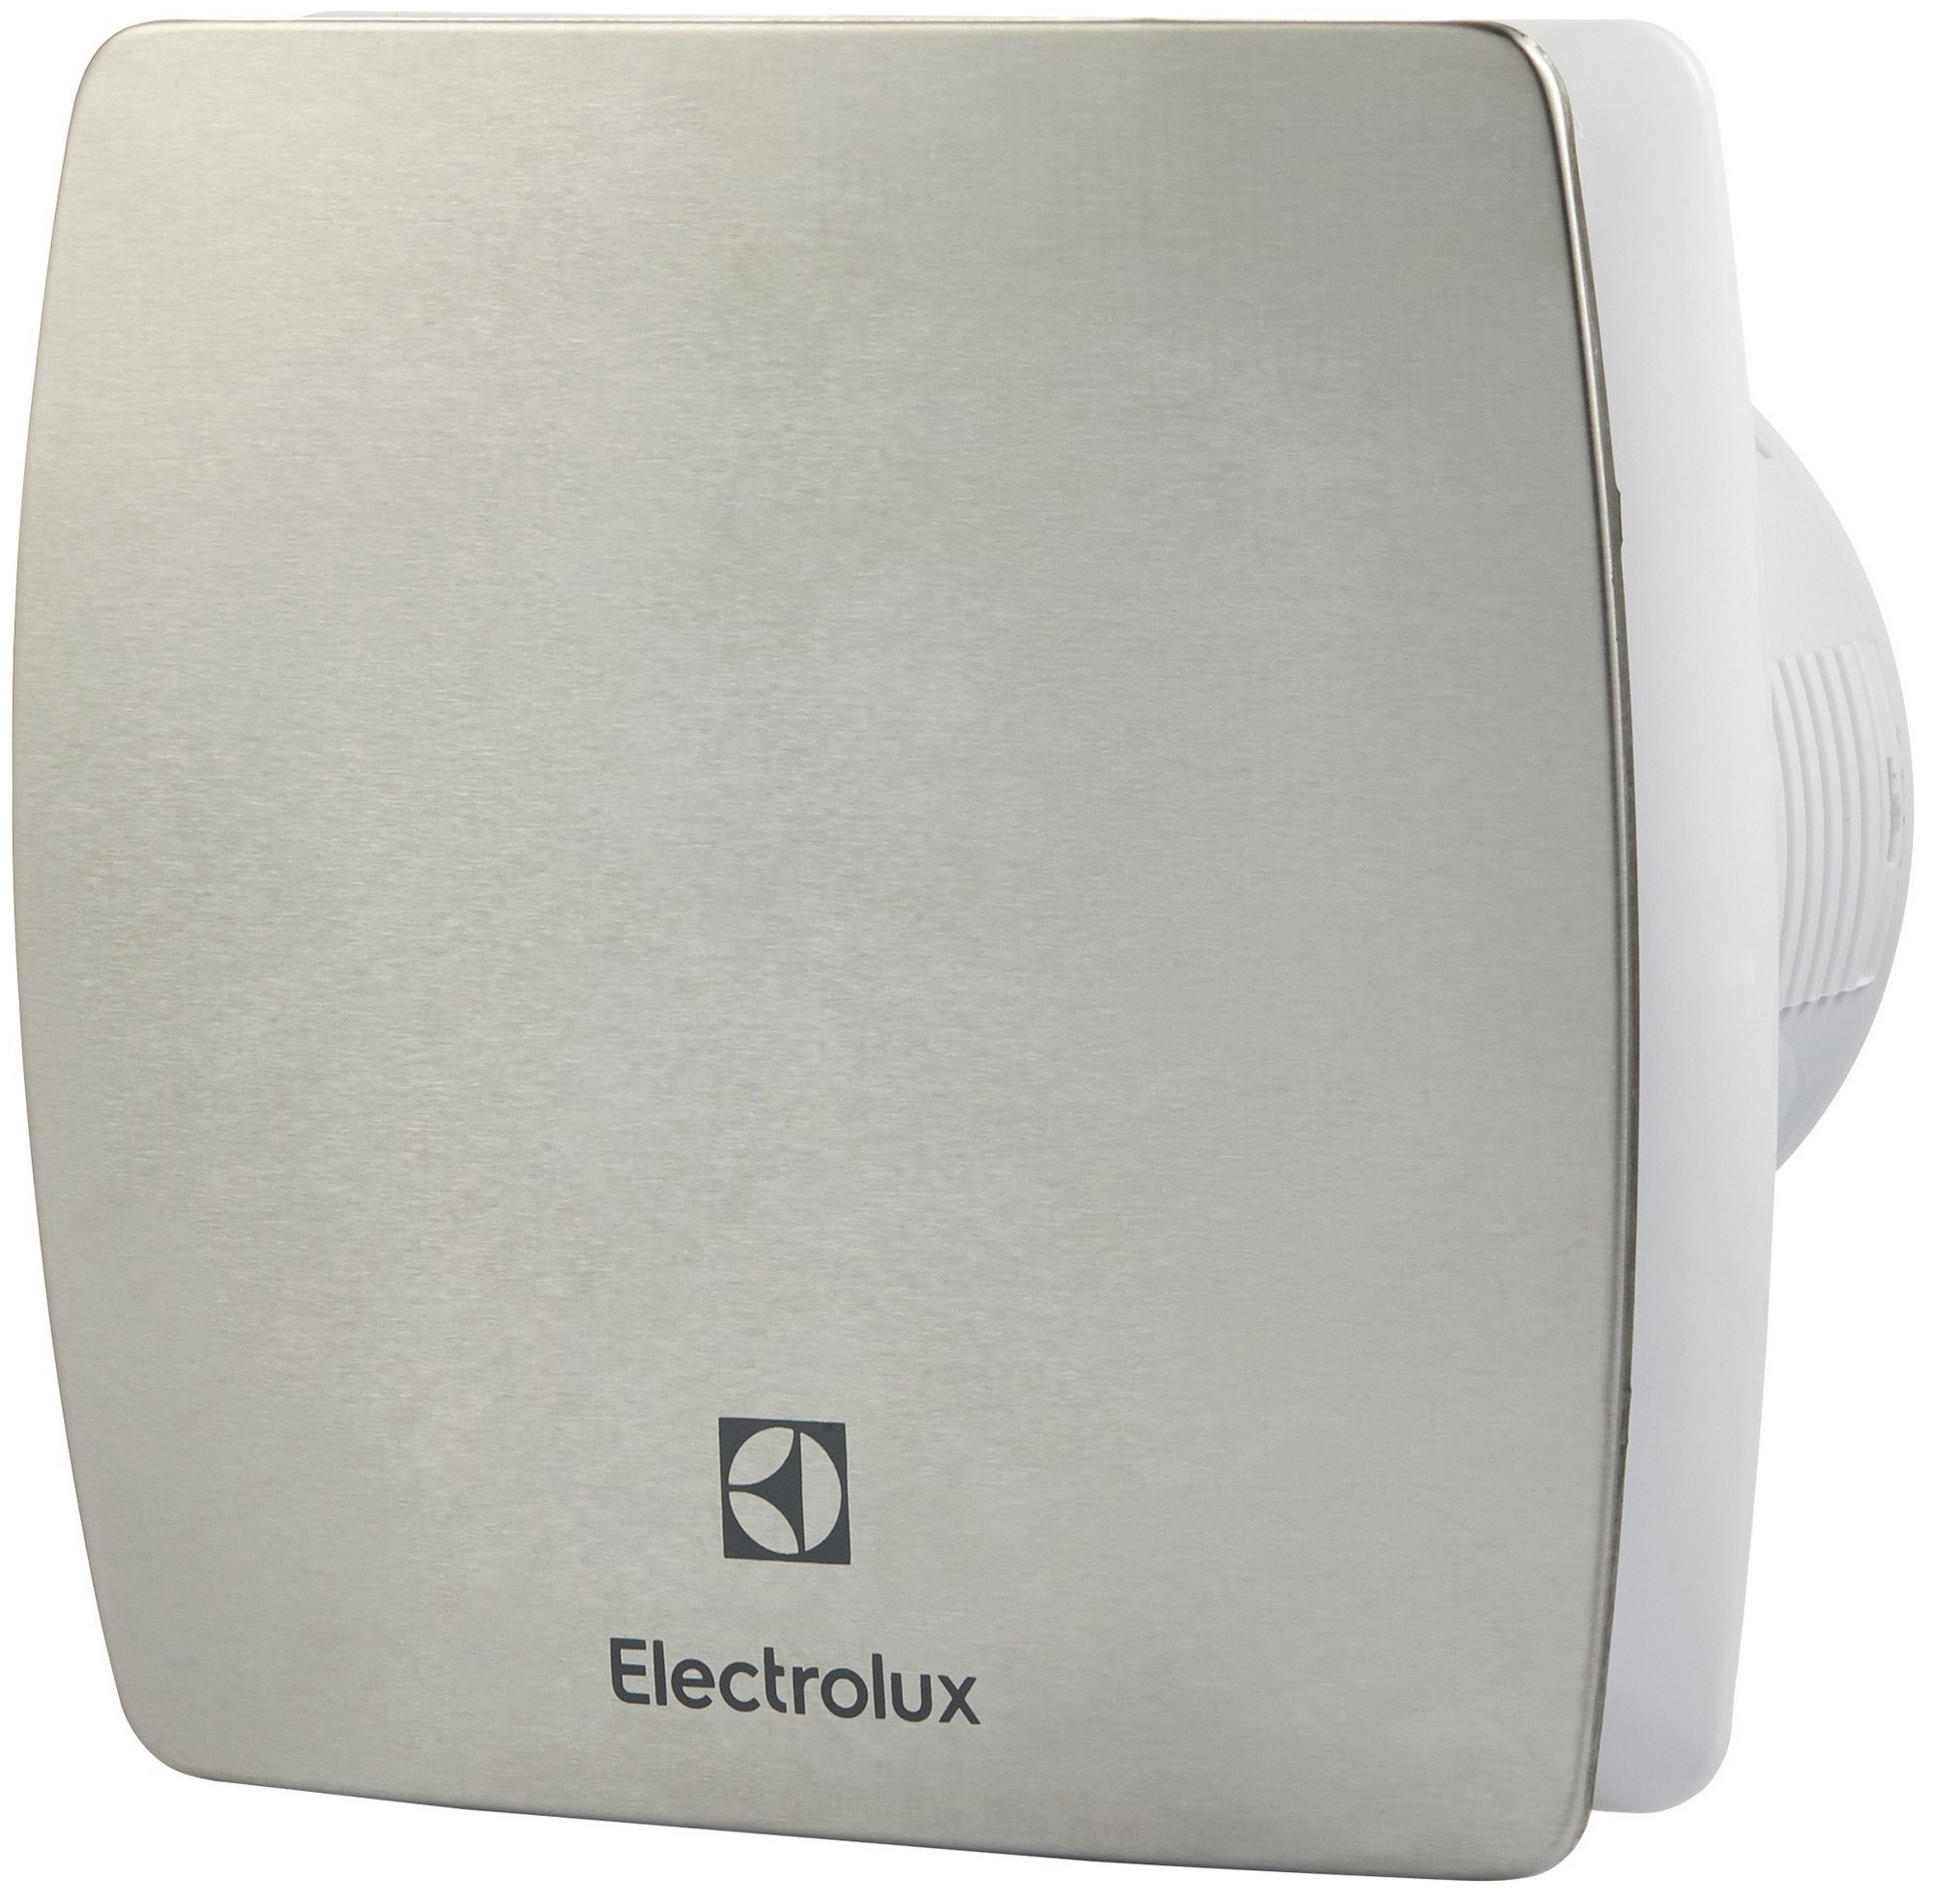 Вентилятор Electrolux с таймером выключения Electrolux Argentum EAFA-100T 